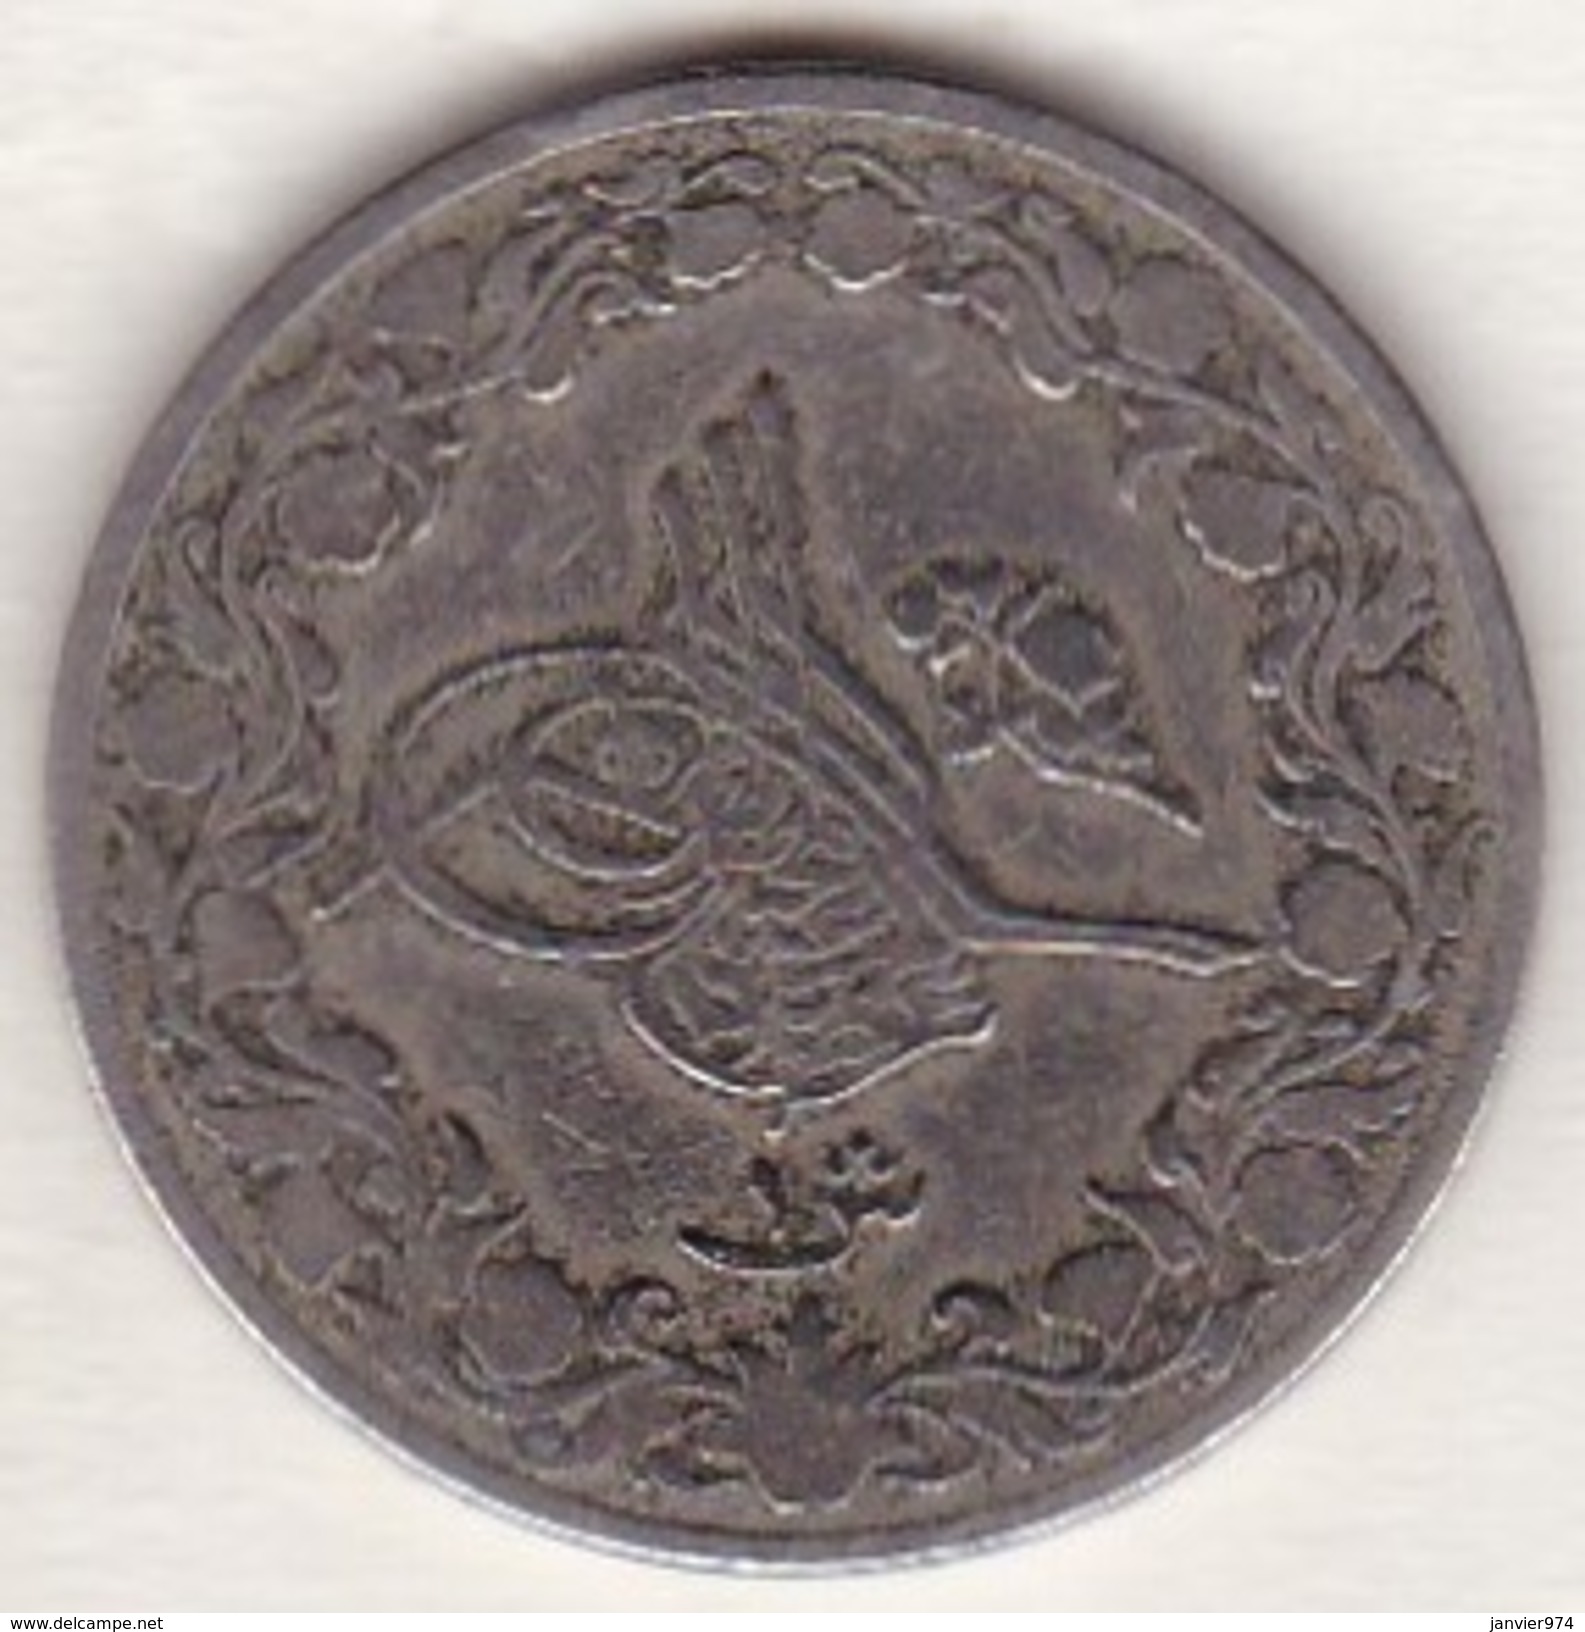 EGYPTE. 1 QIRSH AH 1293 Year 27. Copper Nickel.KM# 299. Empire Ottoman - Egypt